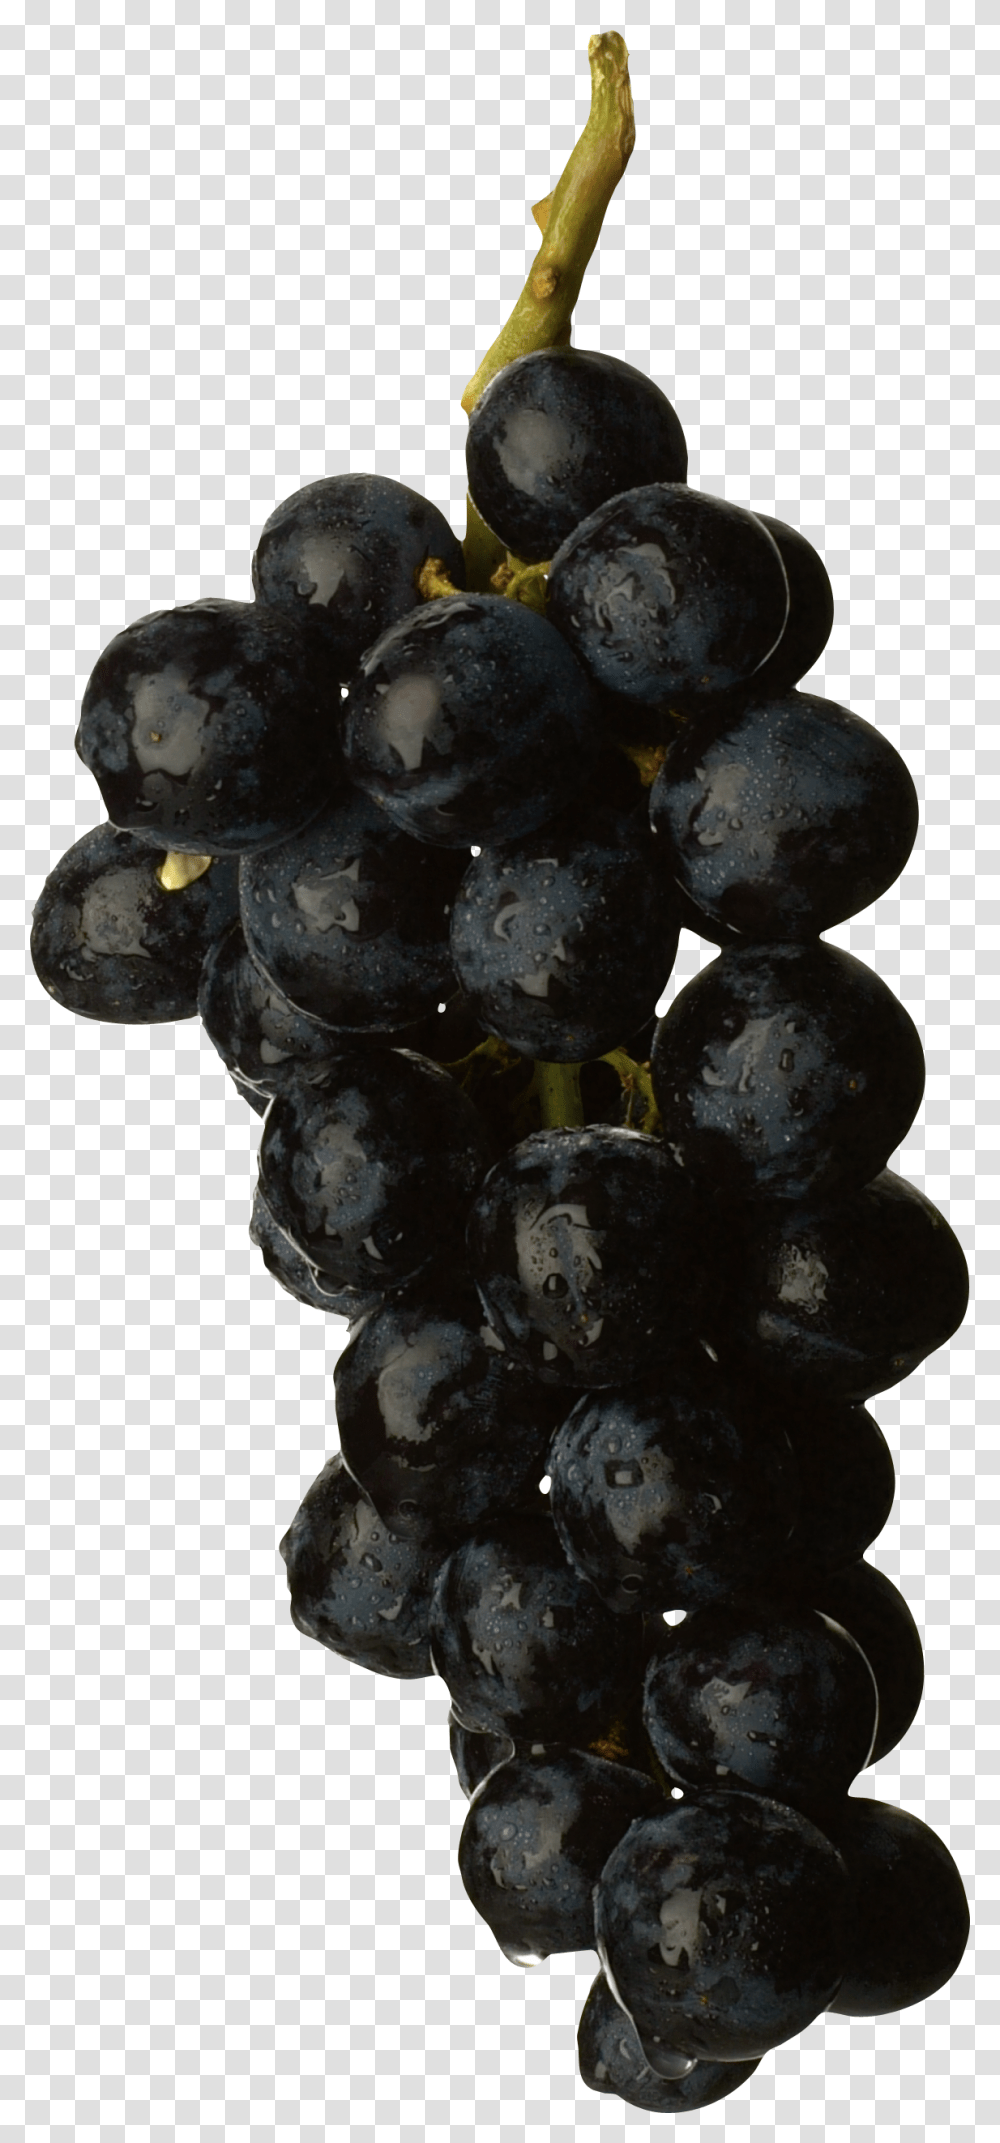 Black Grapes Image Black Grapes Fruit, Plant, Food, Pineapple, Fire Hydrant Transparent Png